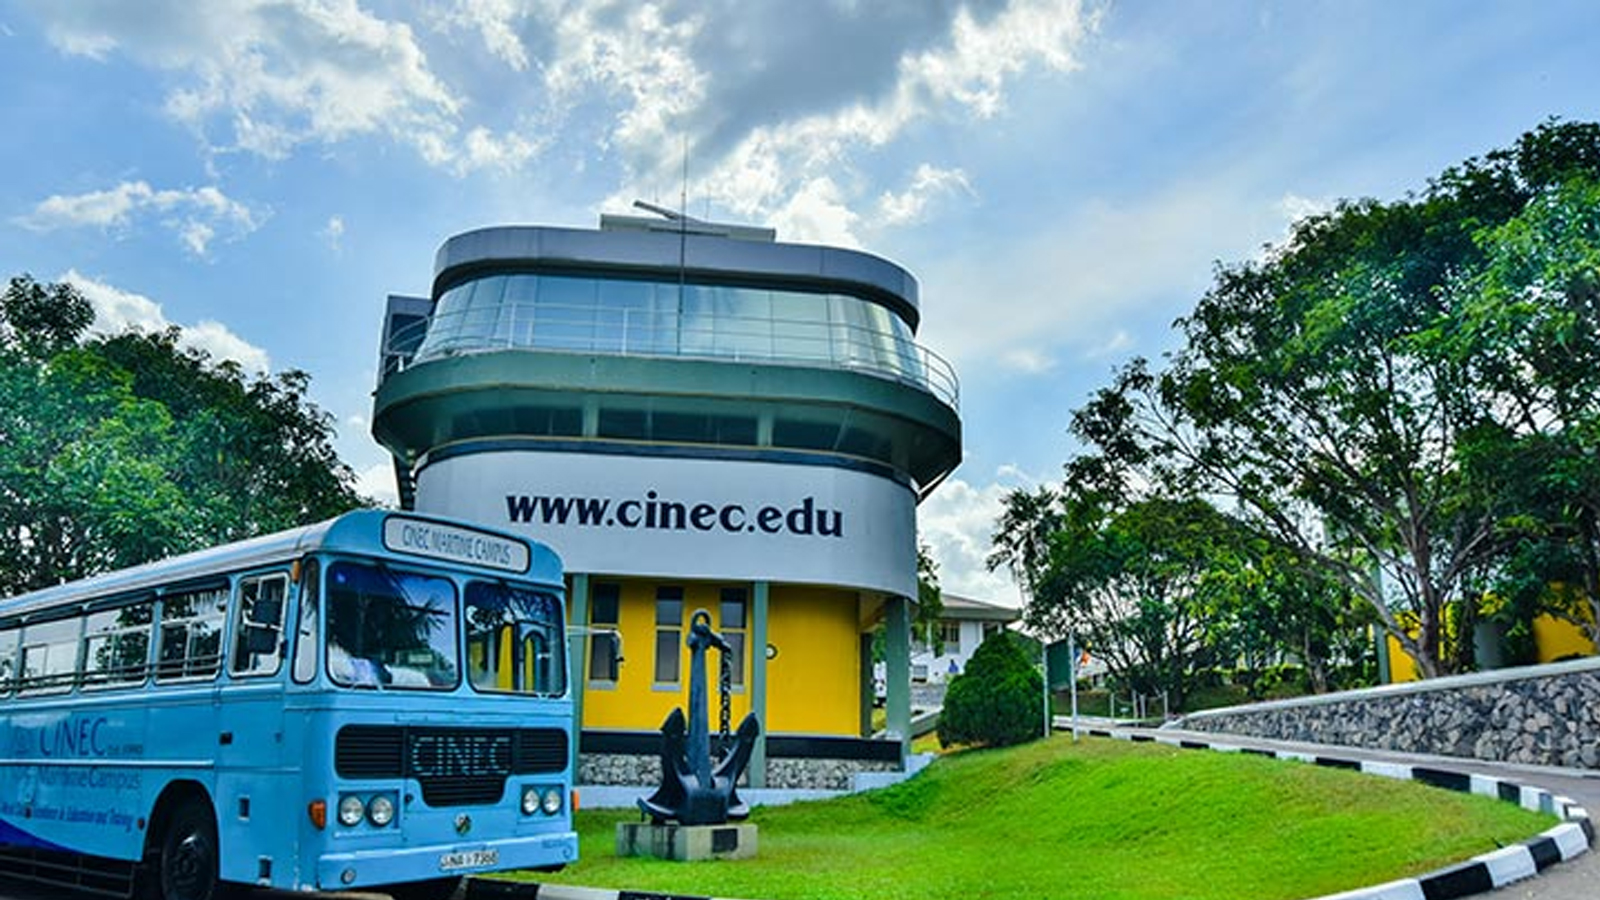 CINEC Campus